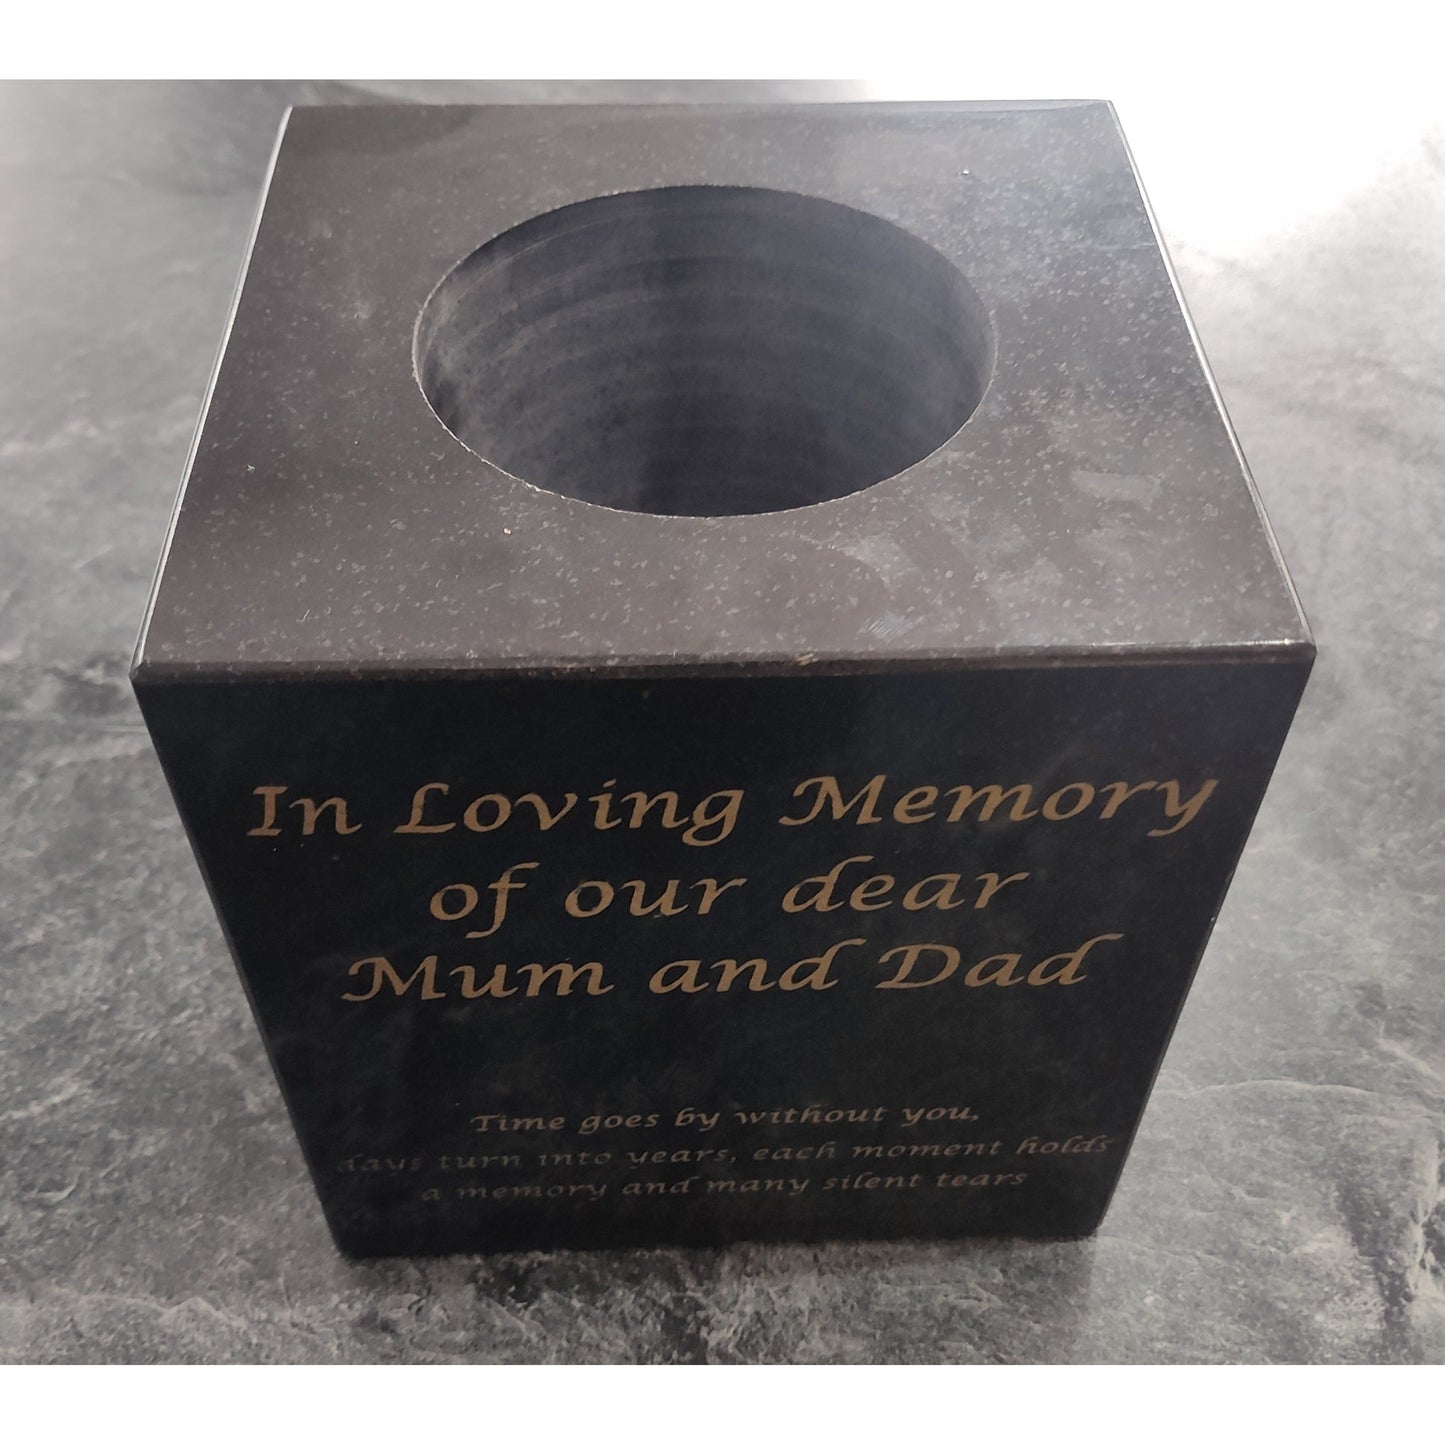 Granite Memorial Vase, Solid Granite, 6x6x6 Inches, 8KG, Includes Flower Pot Insert